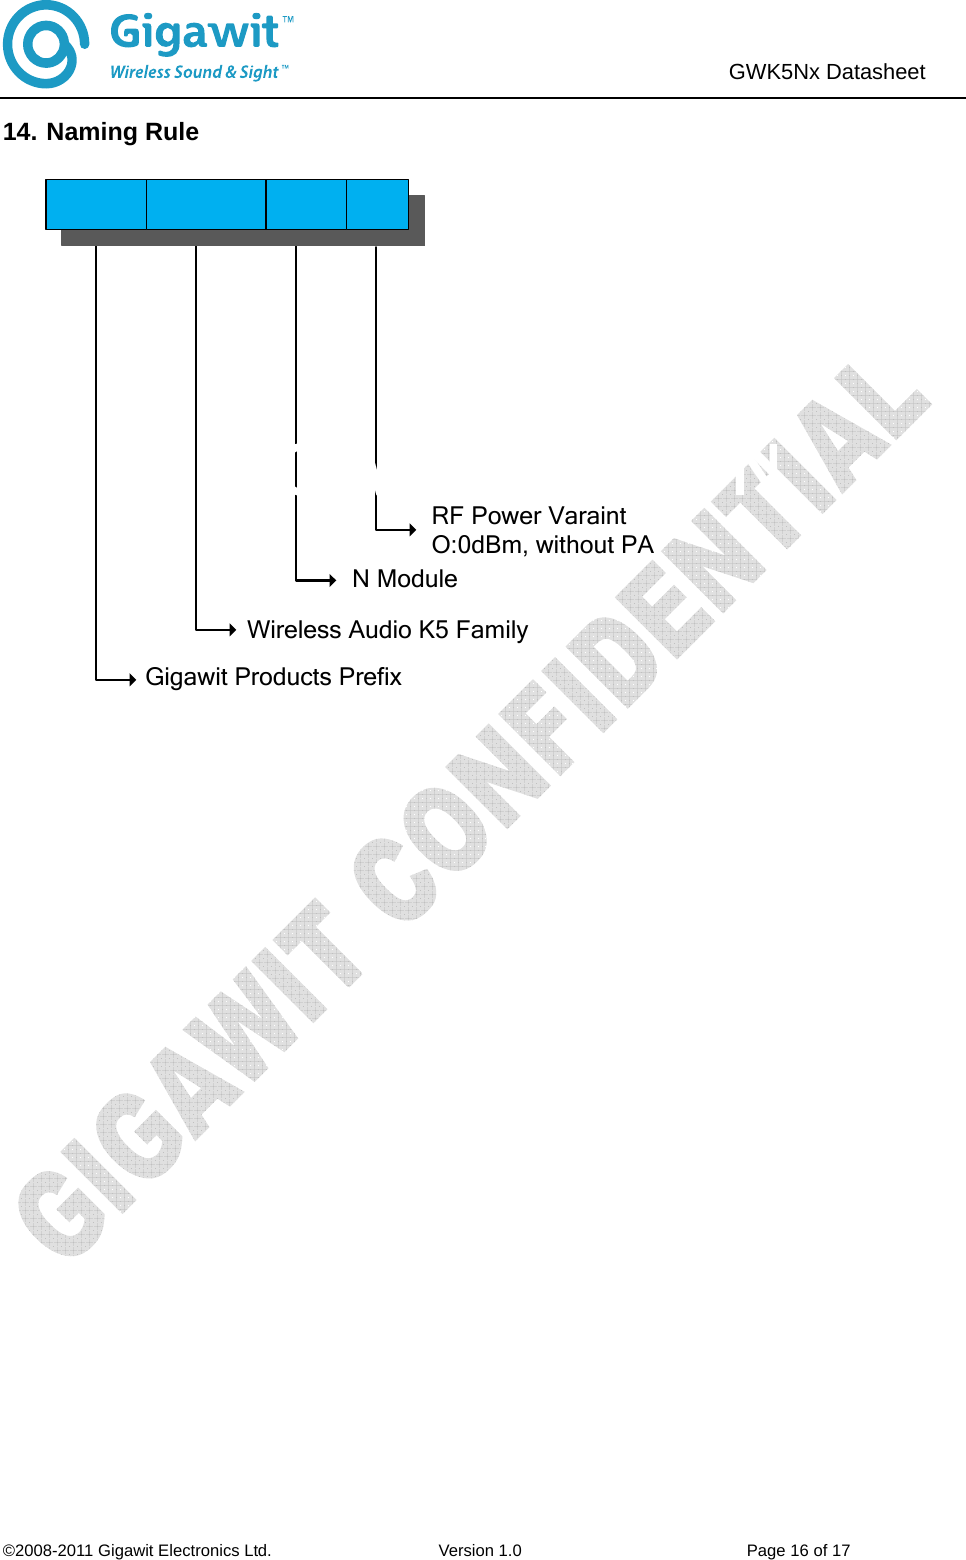                               ©2008-2011 Gigawit Electronics Ltd.                    Version 1.0                           Page 16 of 17  GWK5Nx Datasheet   14. Naming Rule Gigawit Products PrefixWireless Audio K5 FamilyN ModuleRF Power VaraintO:0dBm, without PA 